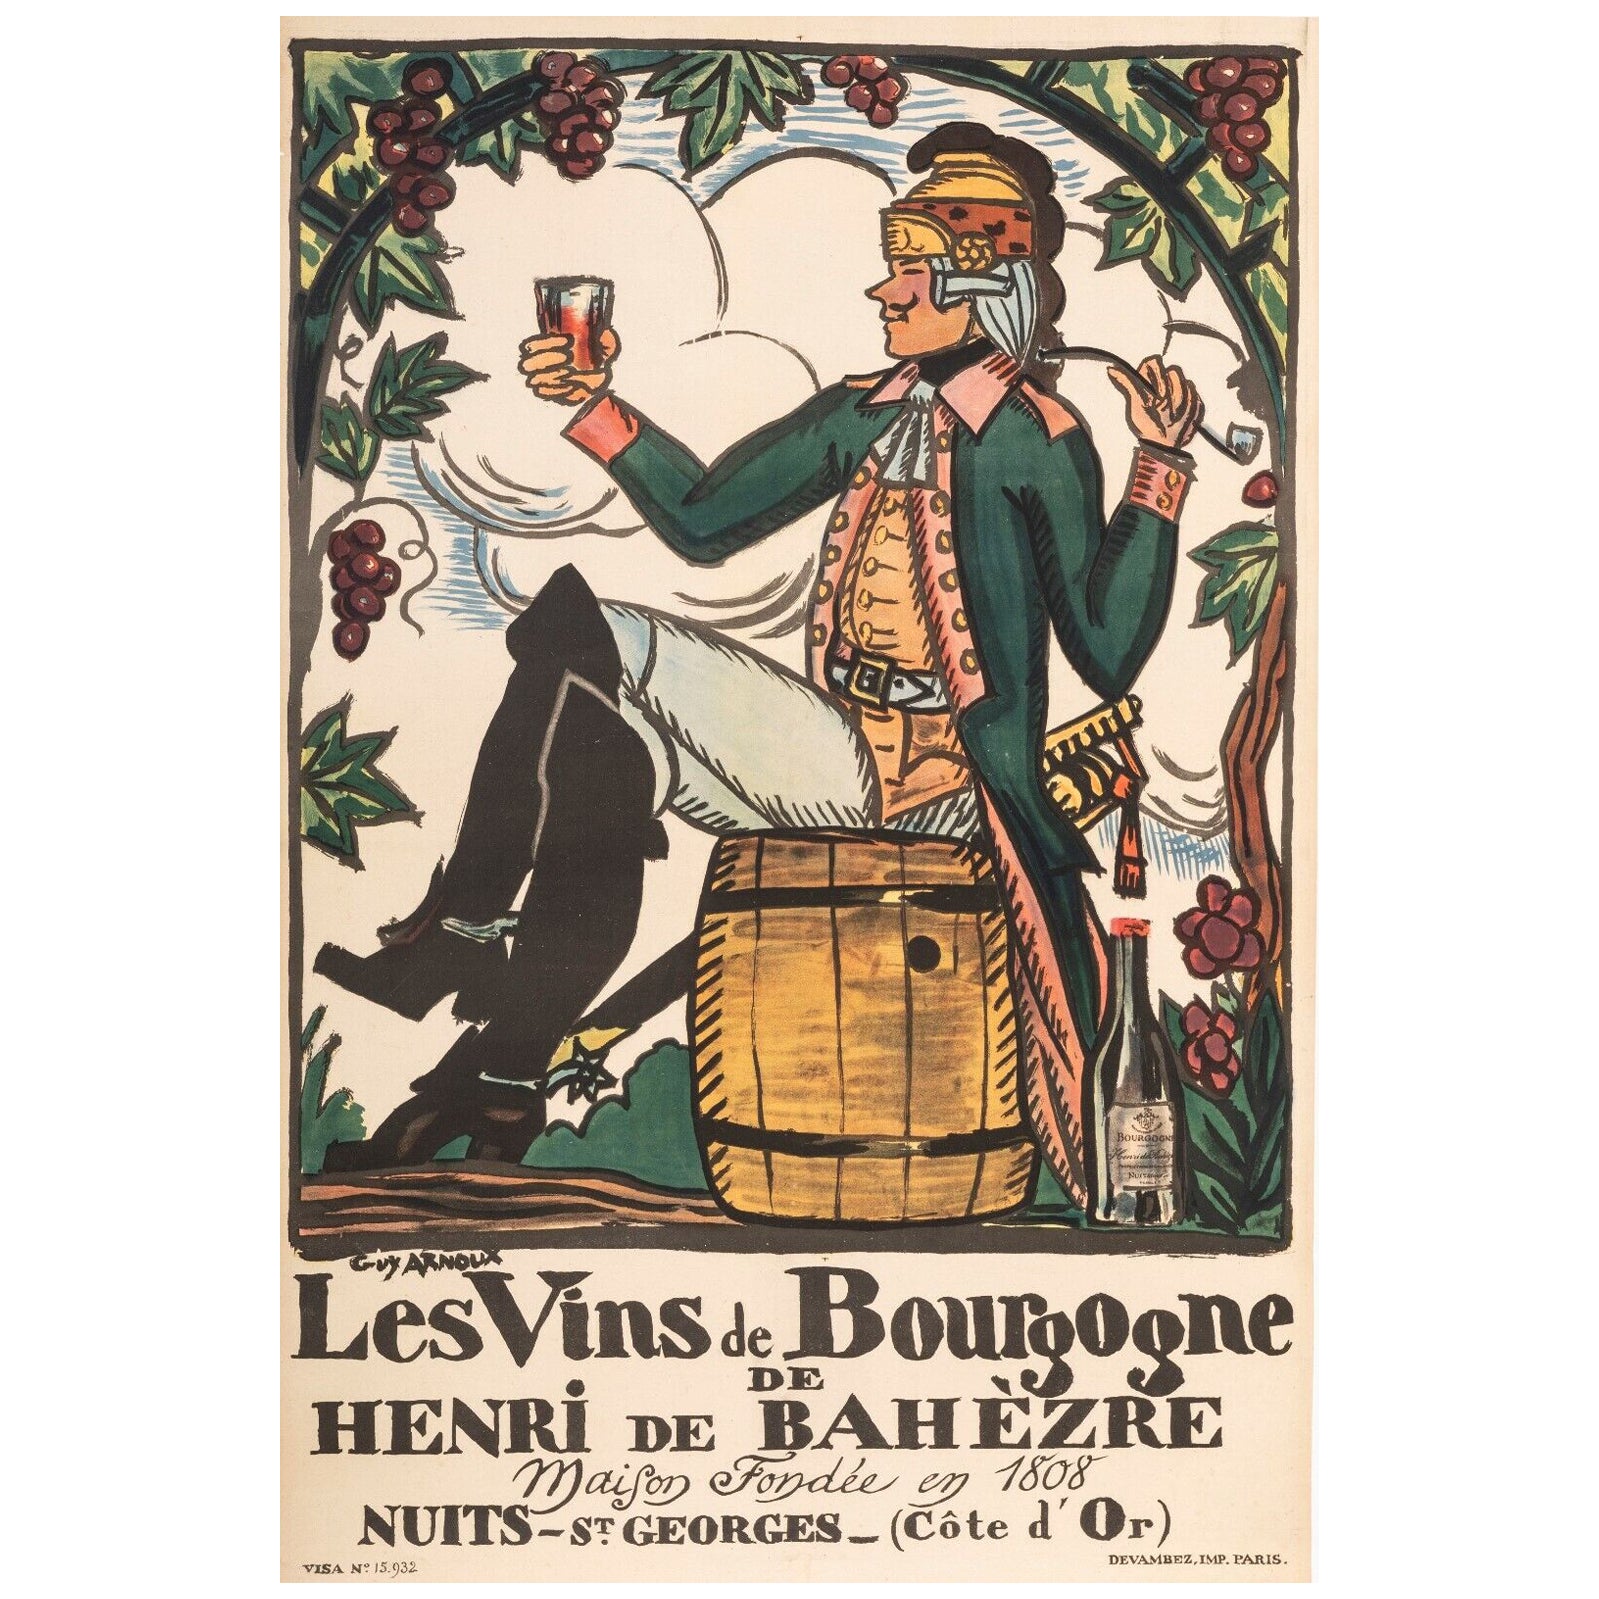 Original Vintage Poster-Arnoux Guy-Vins De Bourgogne-Nuits Saint Georges, 1930